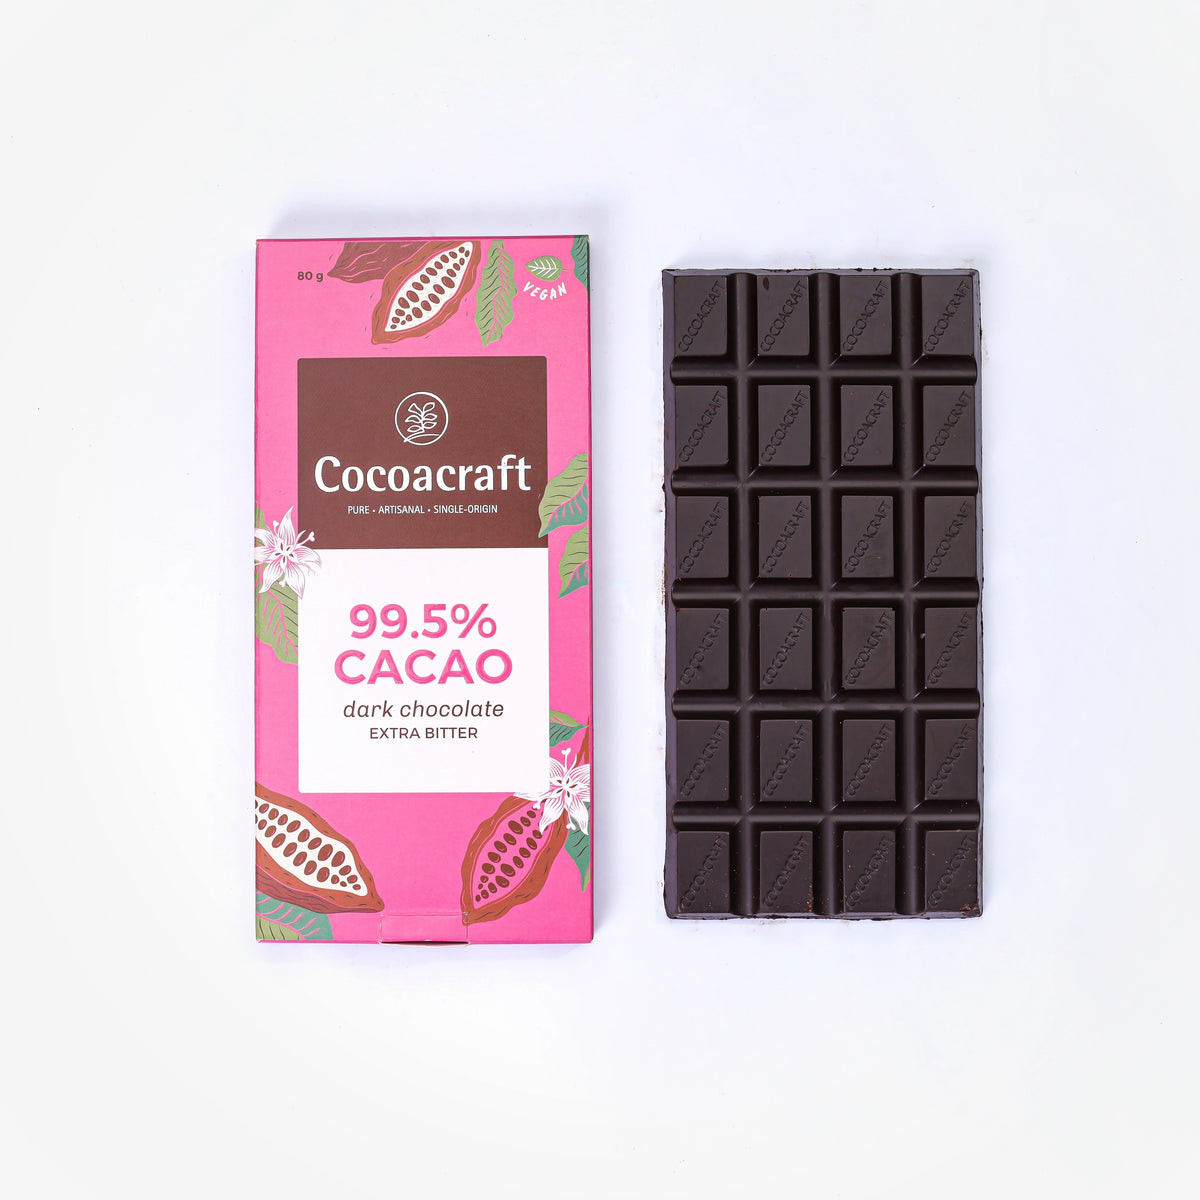 70% PURE Dark Chocolate with Coffee | Pure Chocolate